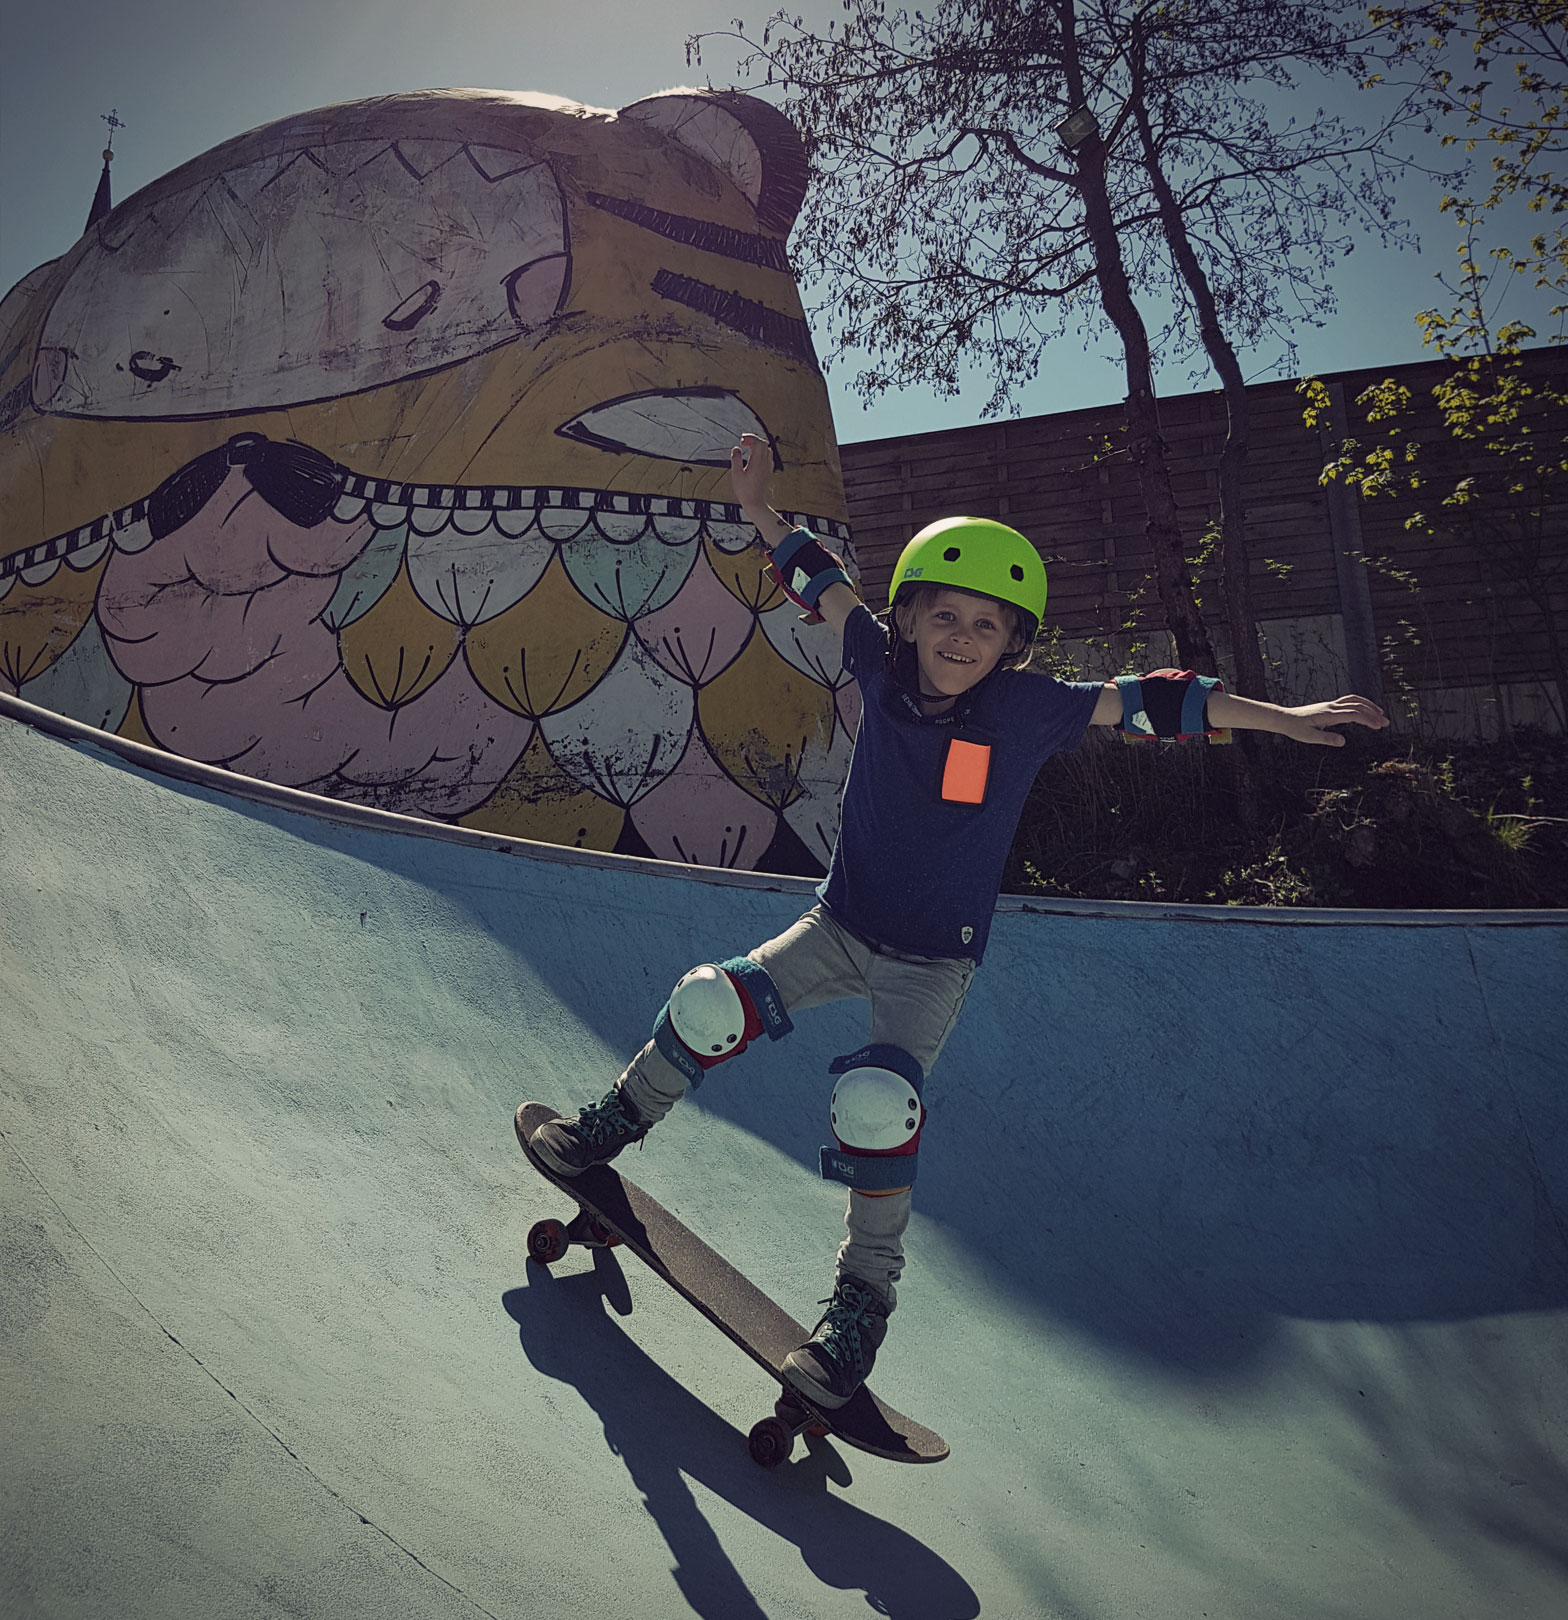 The Snowboarding Family - skateboarding with TSG skate protection